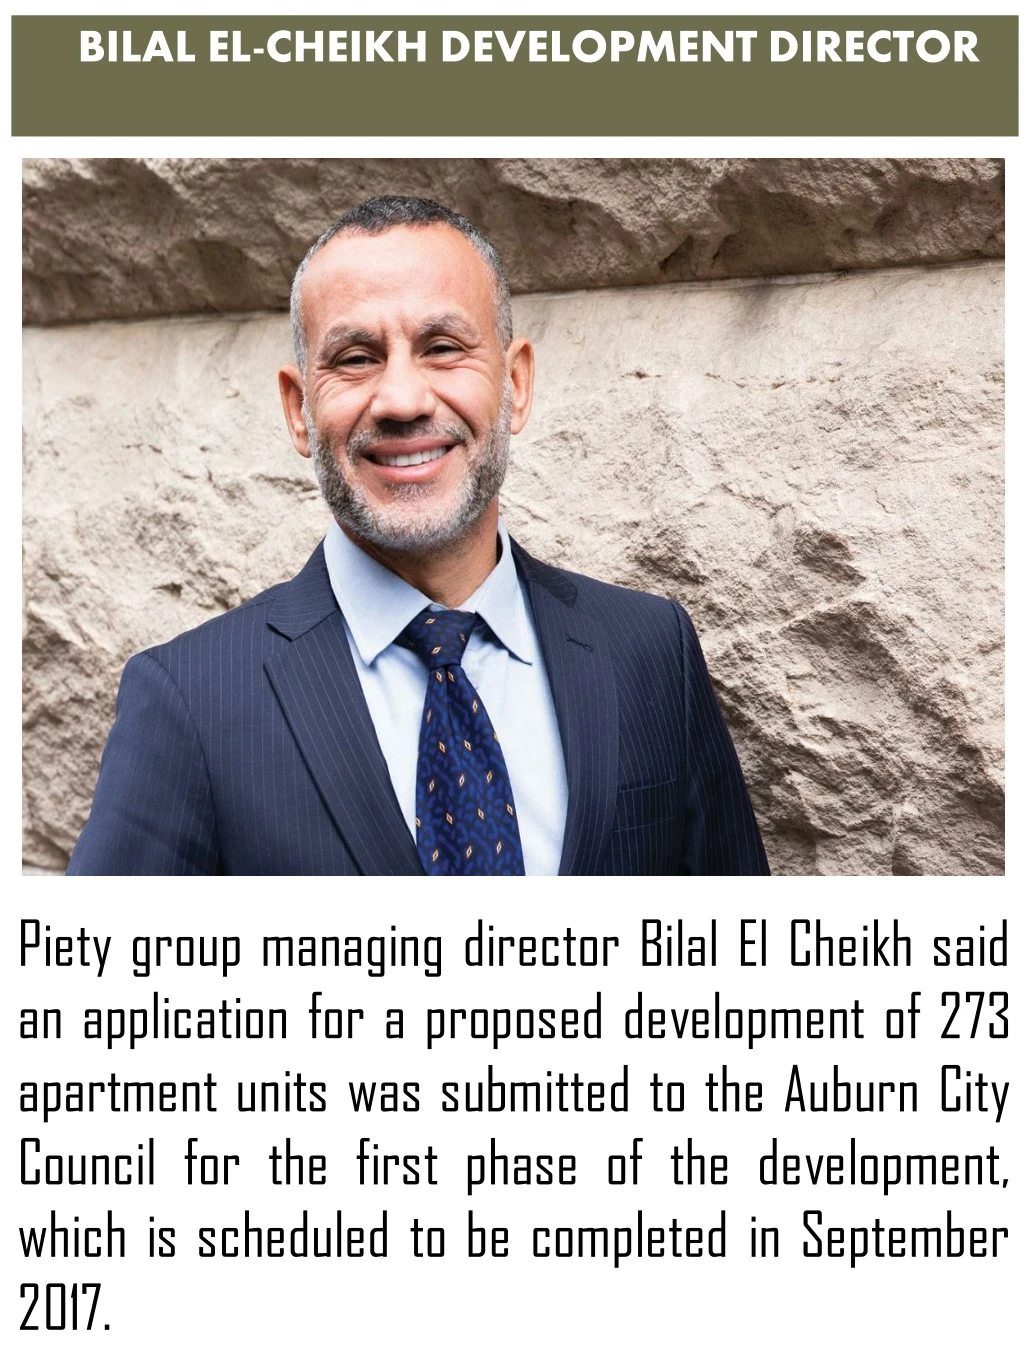 bilal el cheikh development director